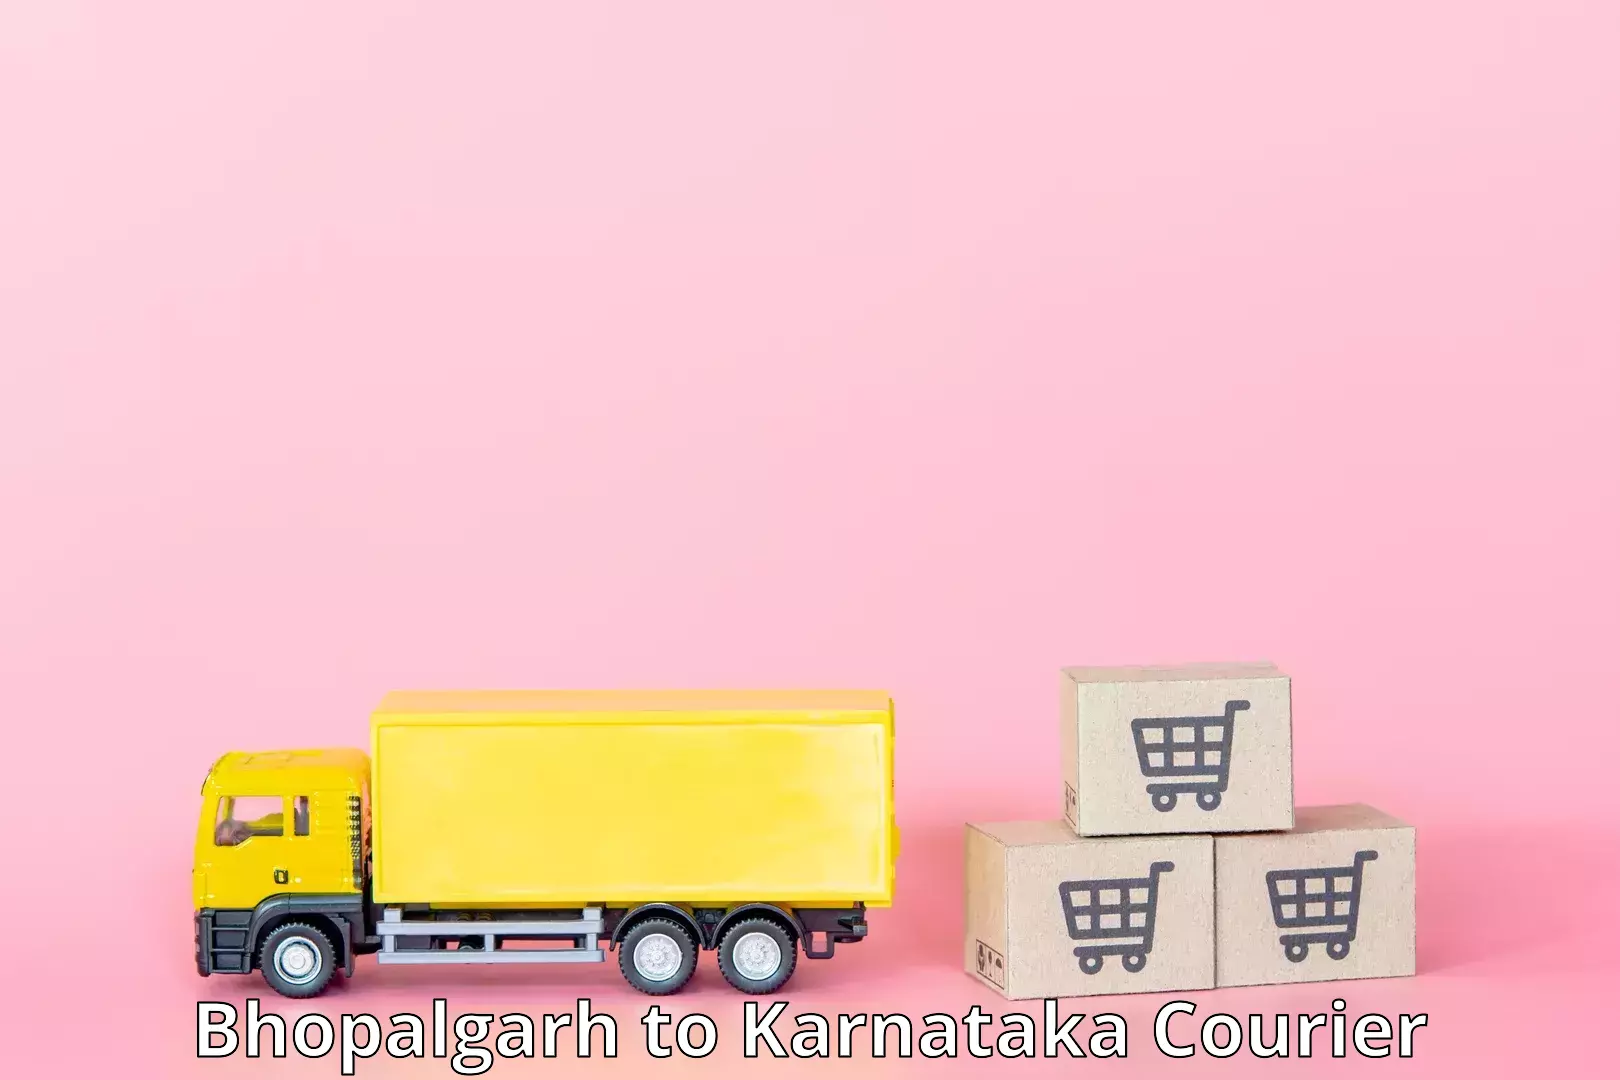 Logistics service provider Bhopalgarh to Nelamangala